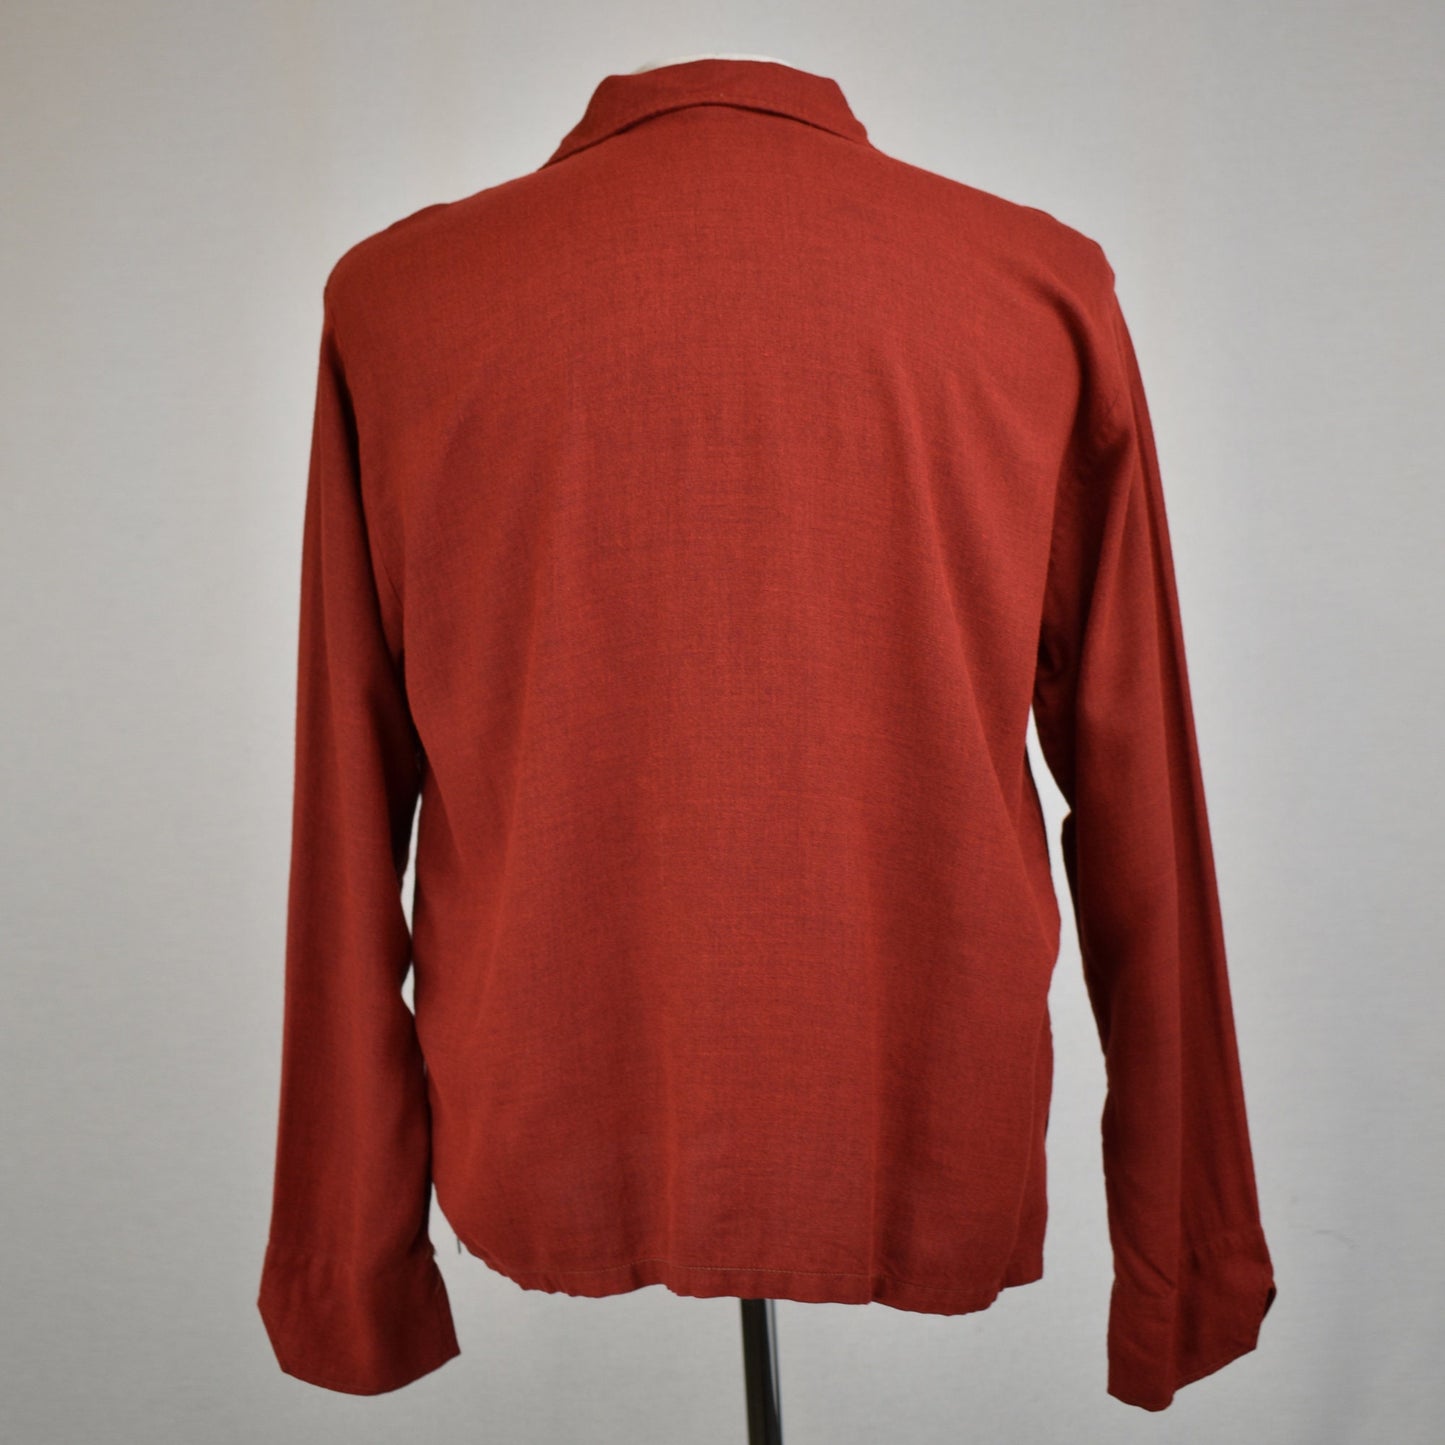 Vintage 40s 50s Pullover Men's Shirt - Rayon Gabardine - Size Zip at Hem - Open Collar - Da Vinci California Brand